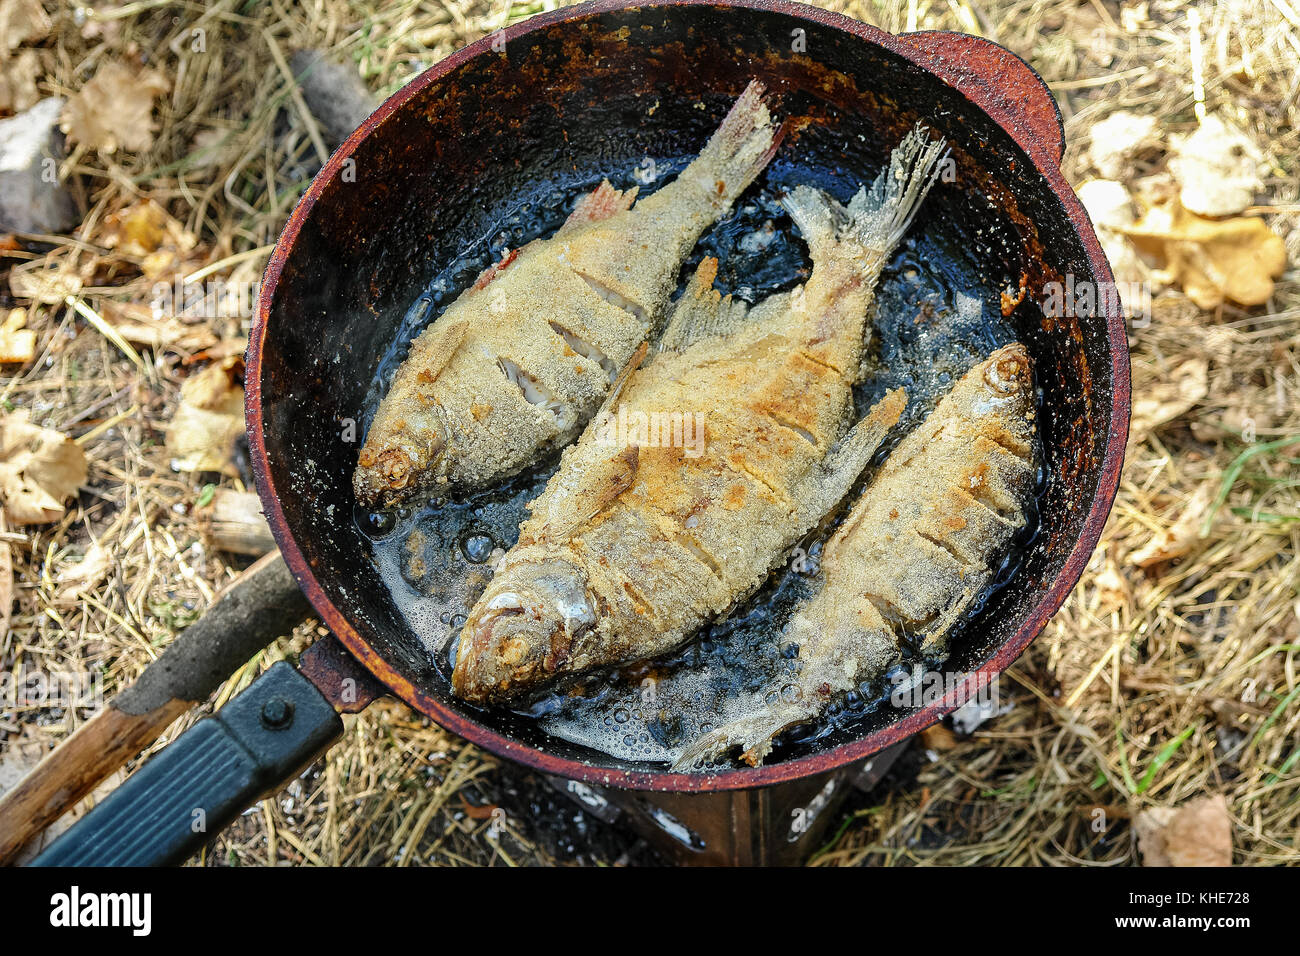 Pan frying fish 